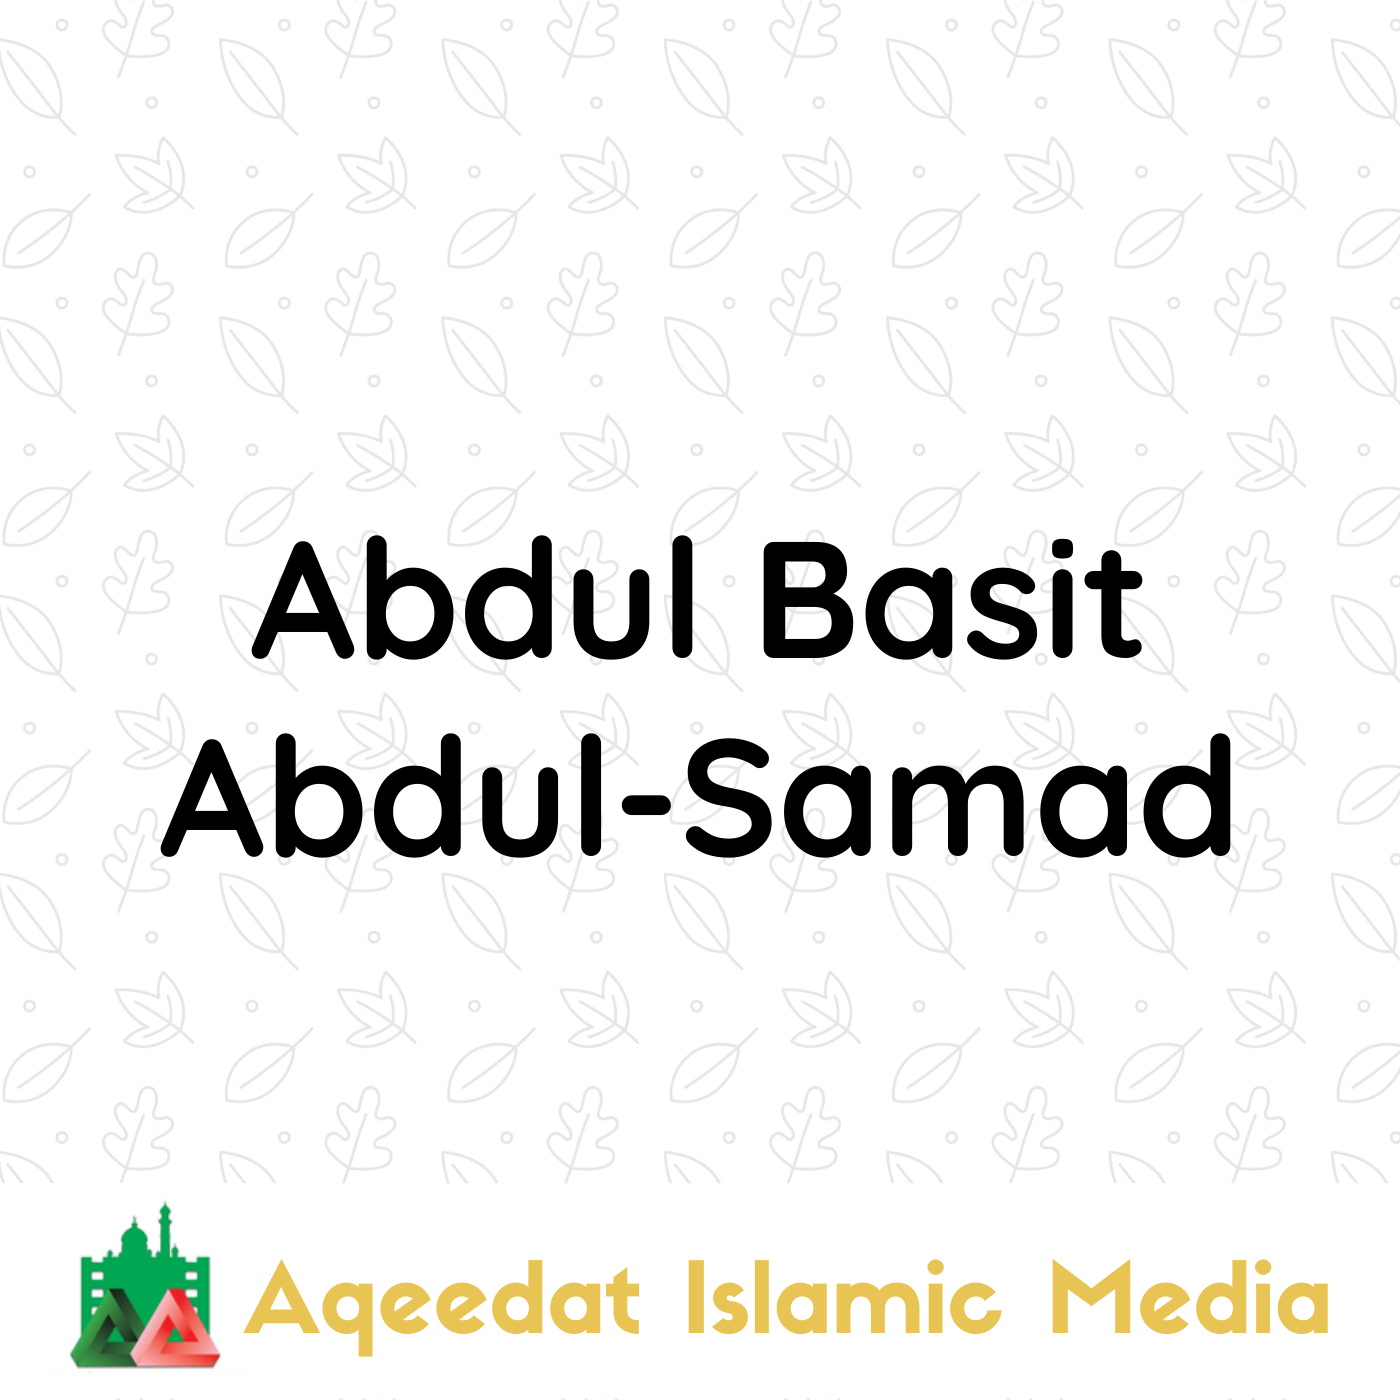  Abdul Basit Abdul-Samad